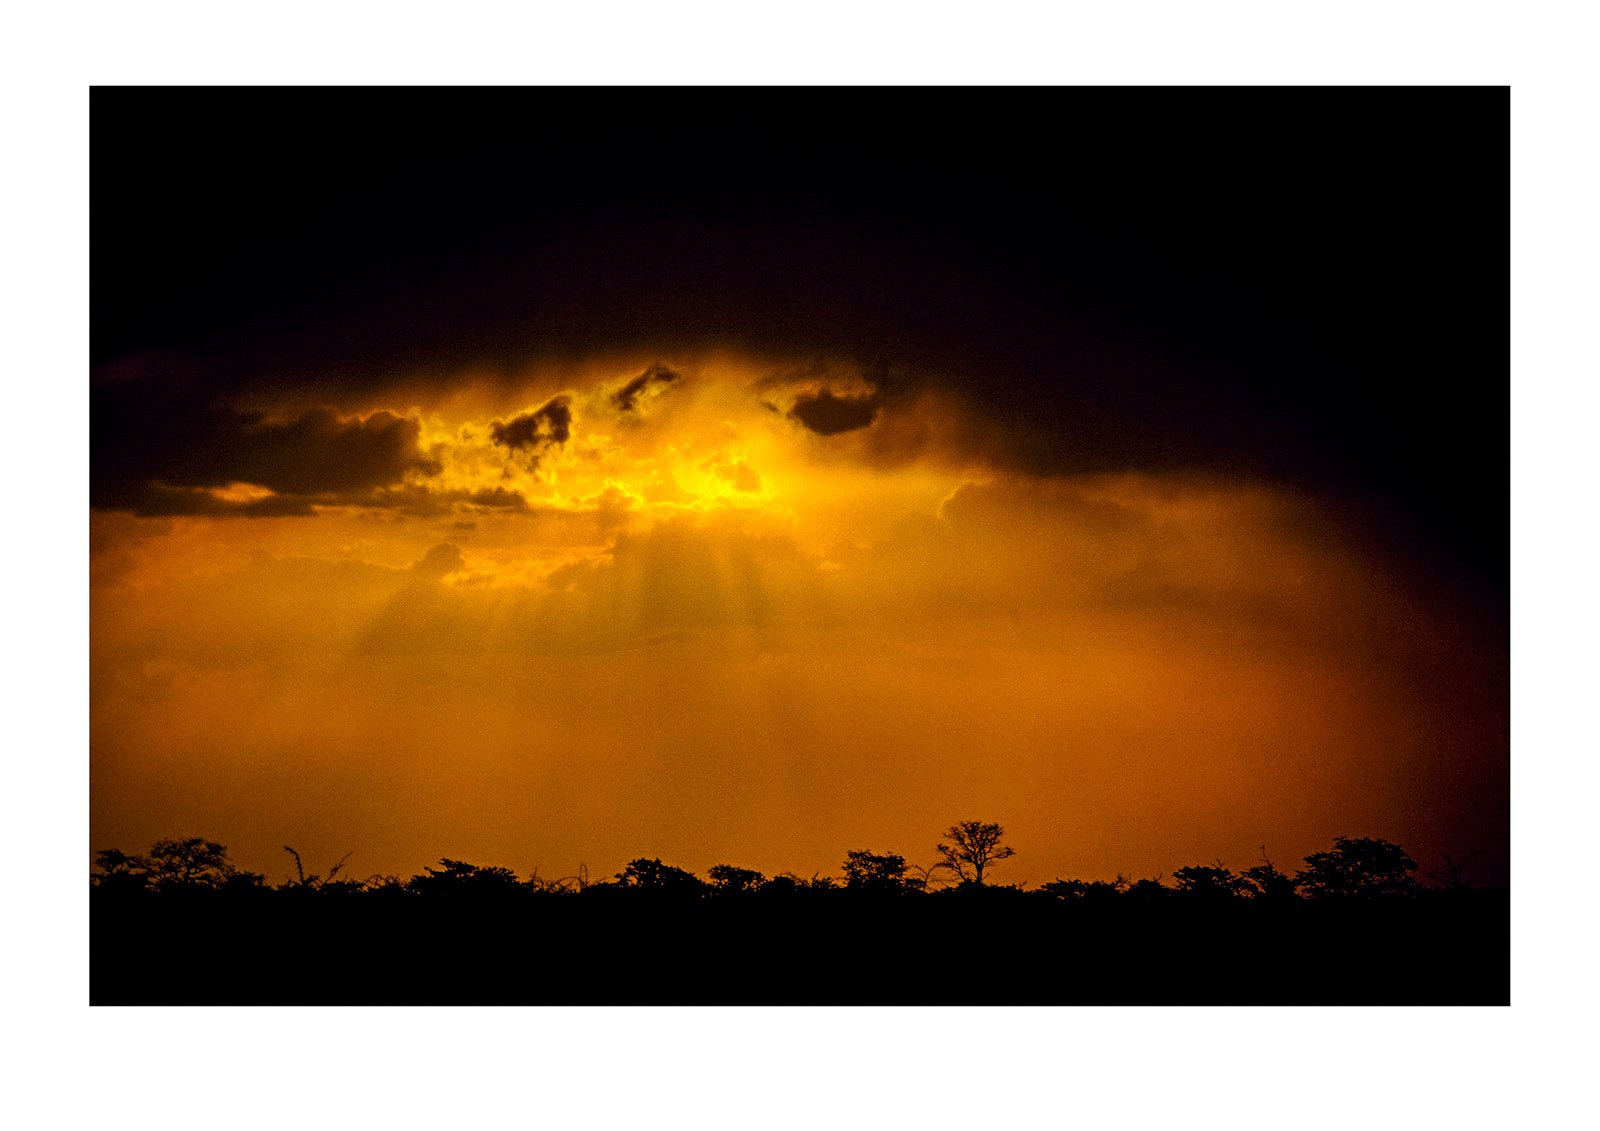 A dark and menacing storm at sunset descends over the savannah veld. Etosha National Park, Namibia.